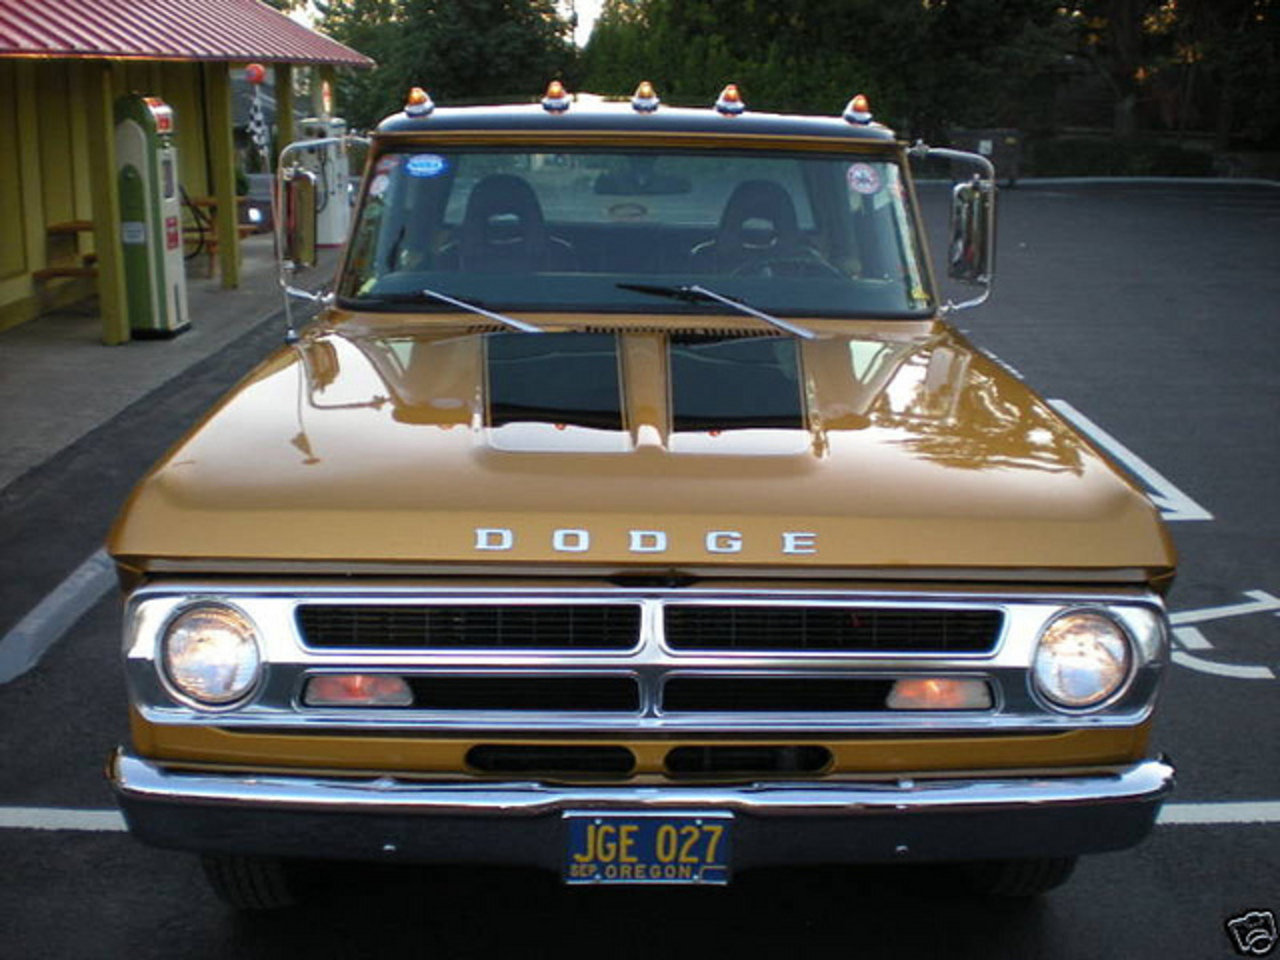 1970 Dodge D300 Crew Cab Race Car Transporter | Flickr - Photo ...